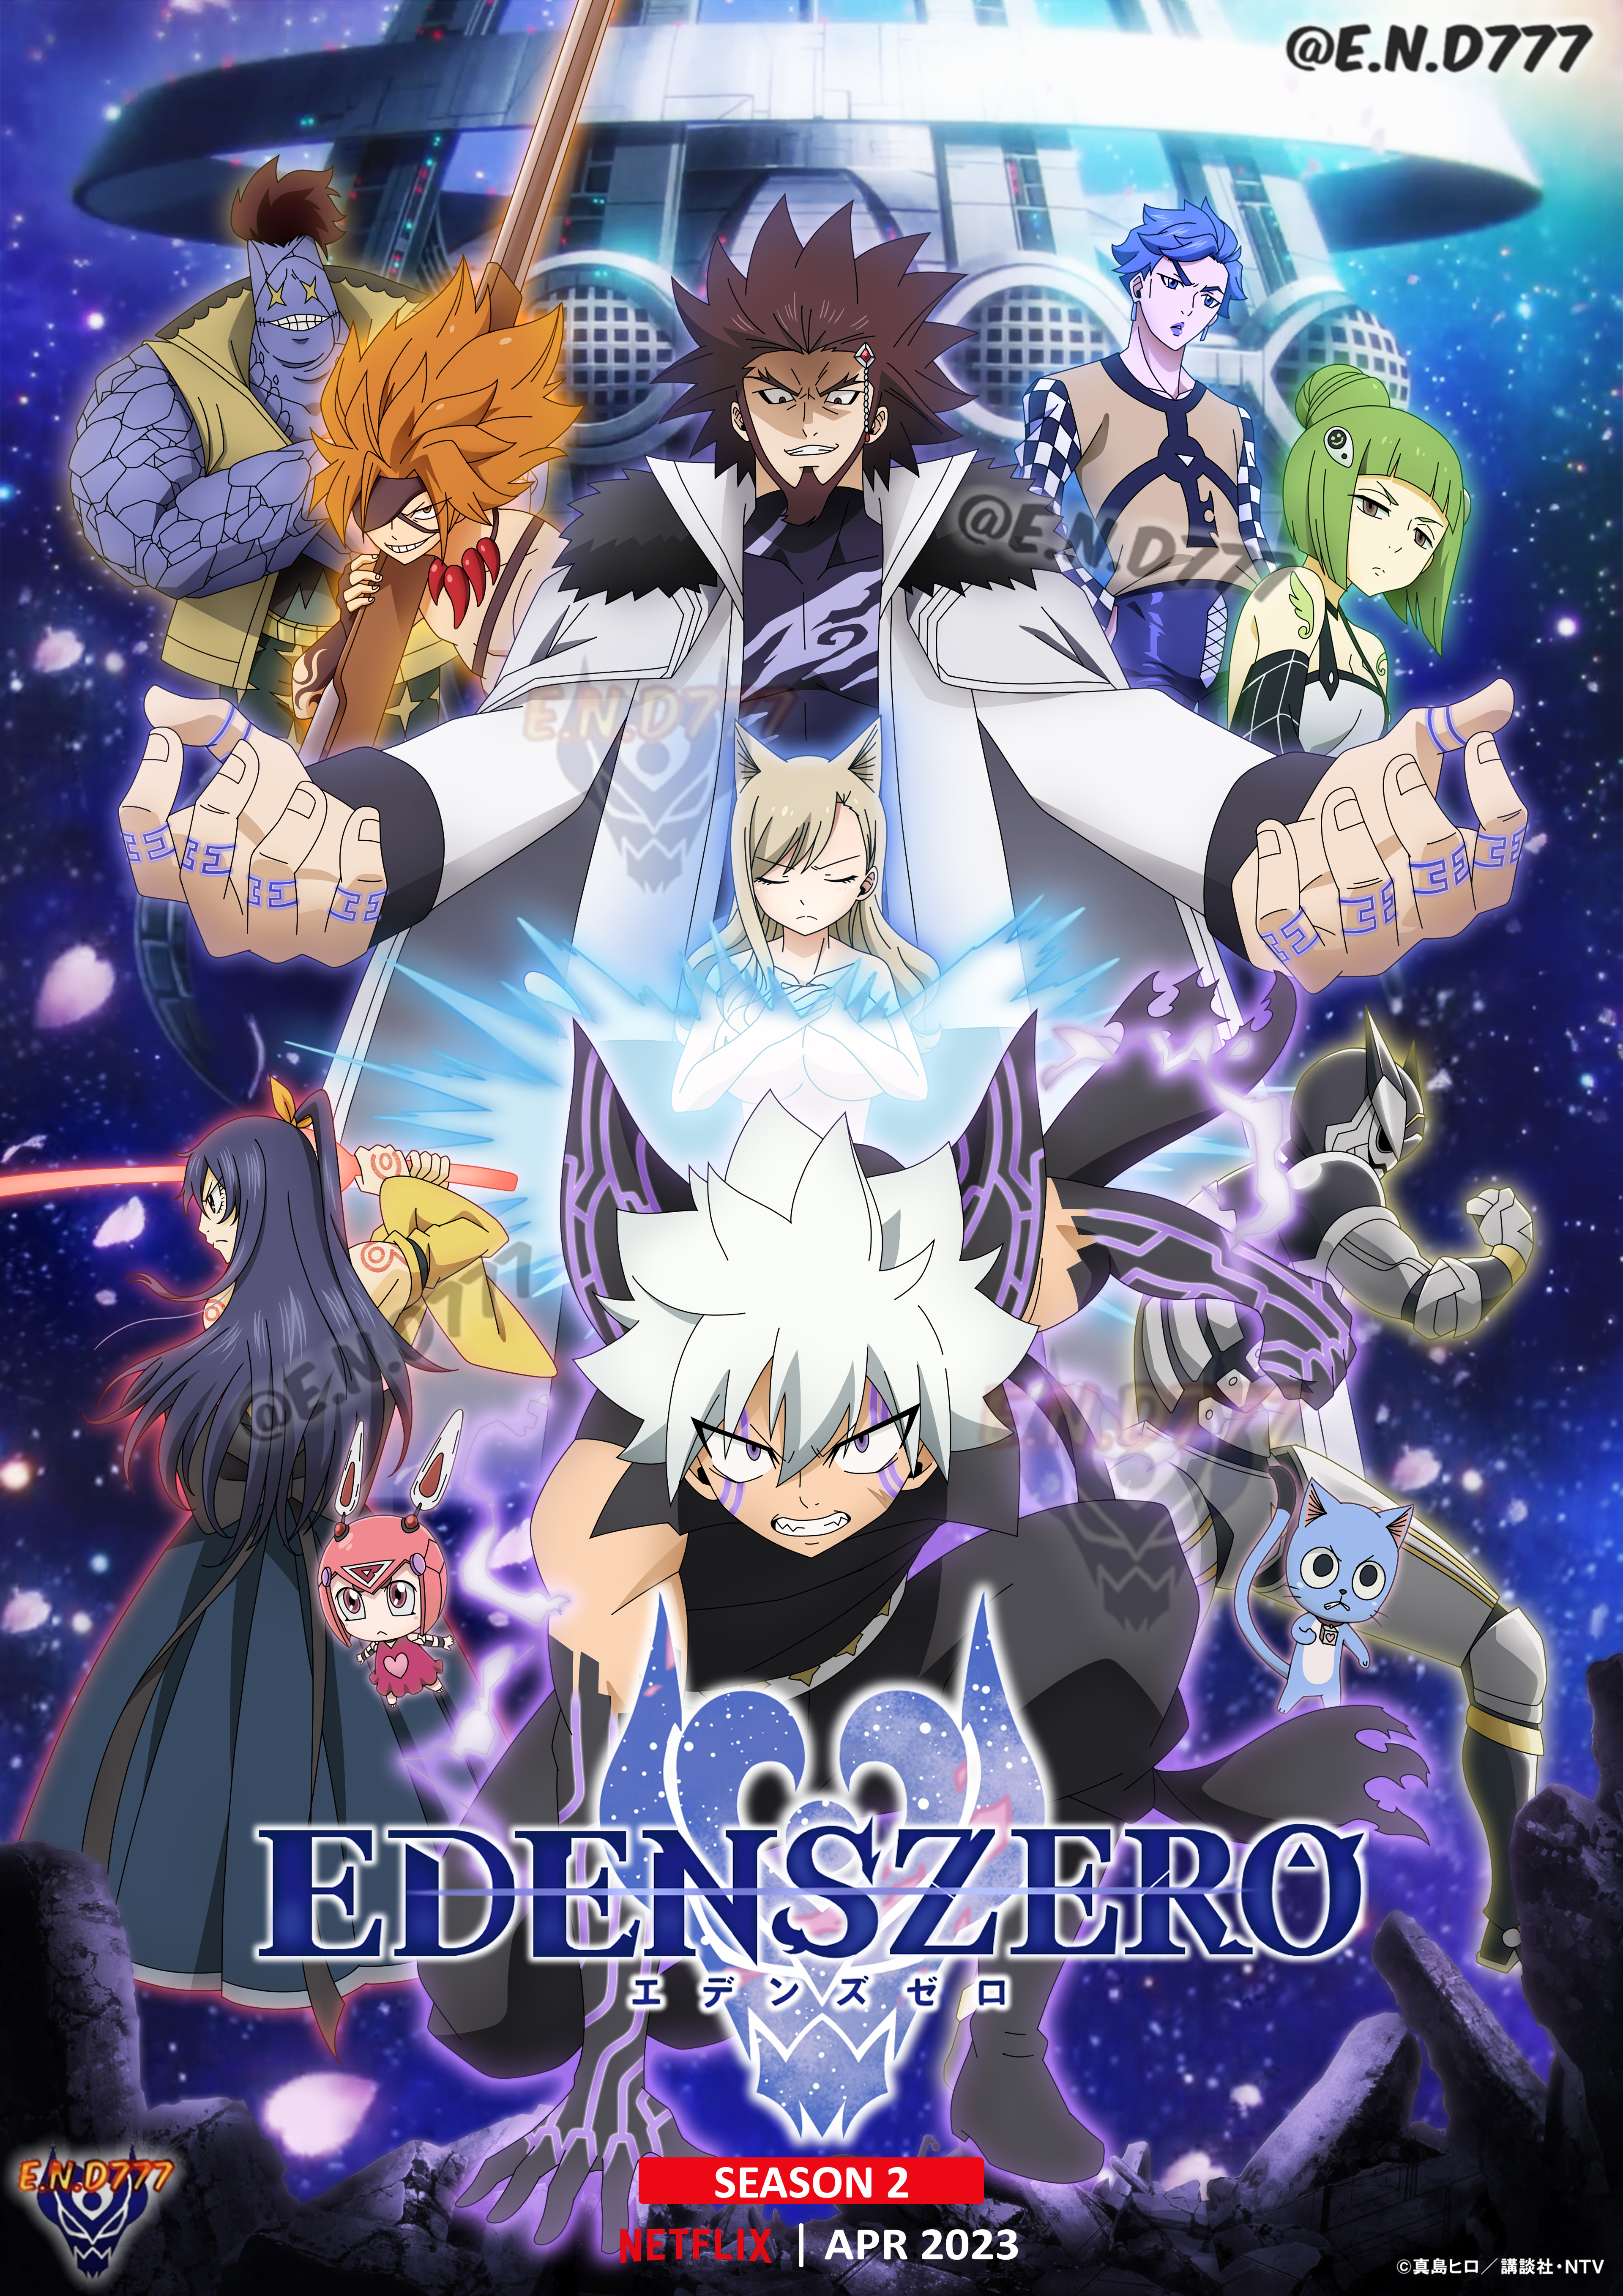 Edens Zero season 2 episode 9: Release date and time, where to